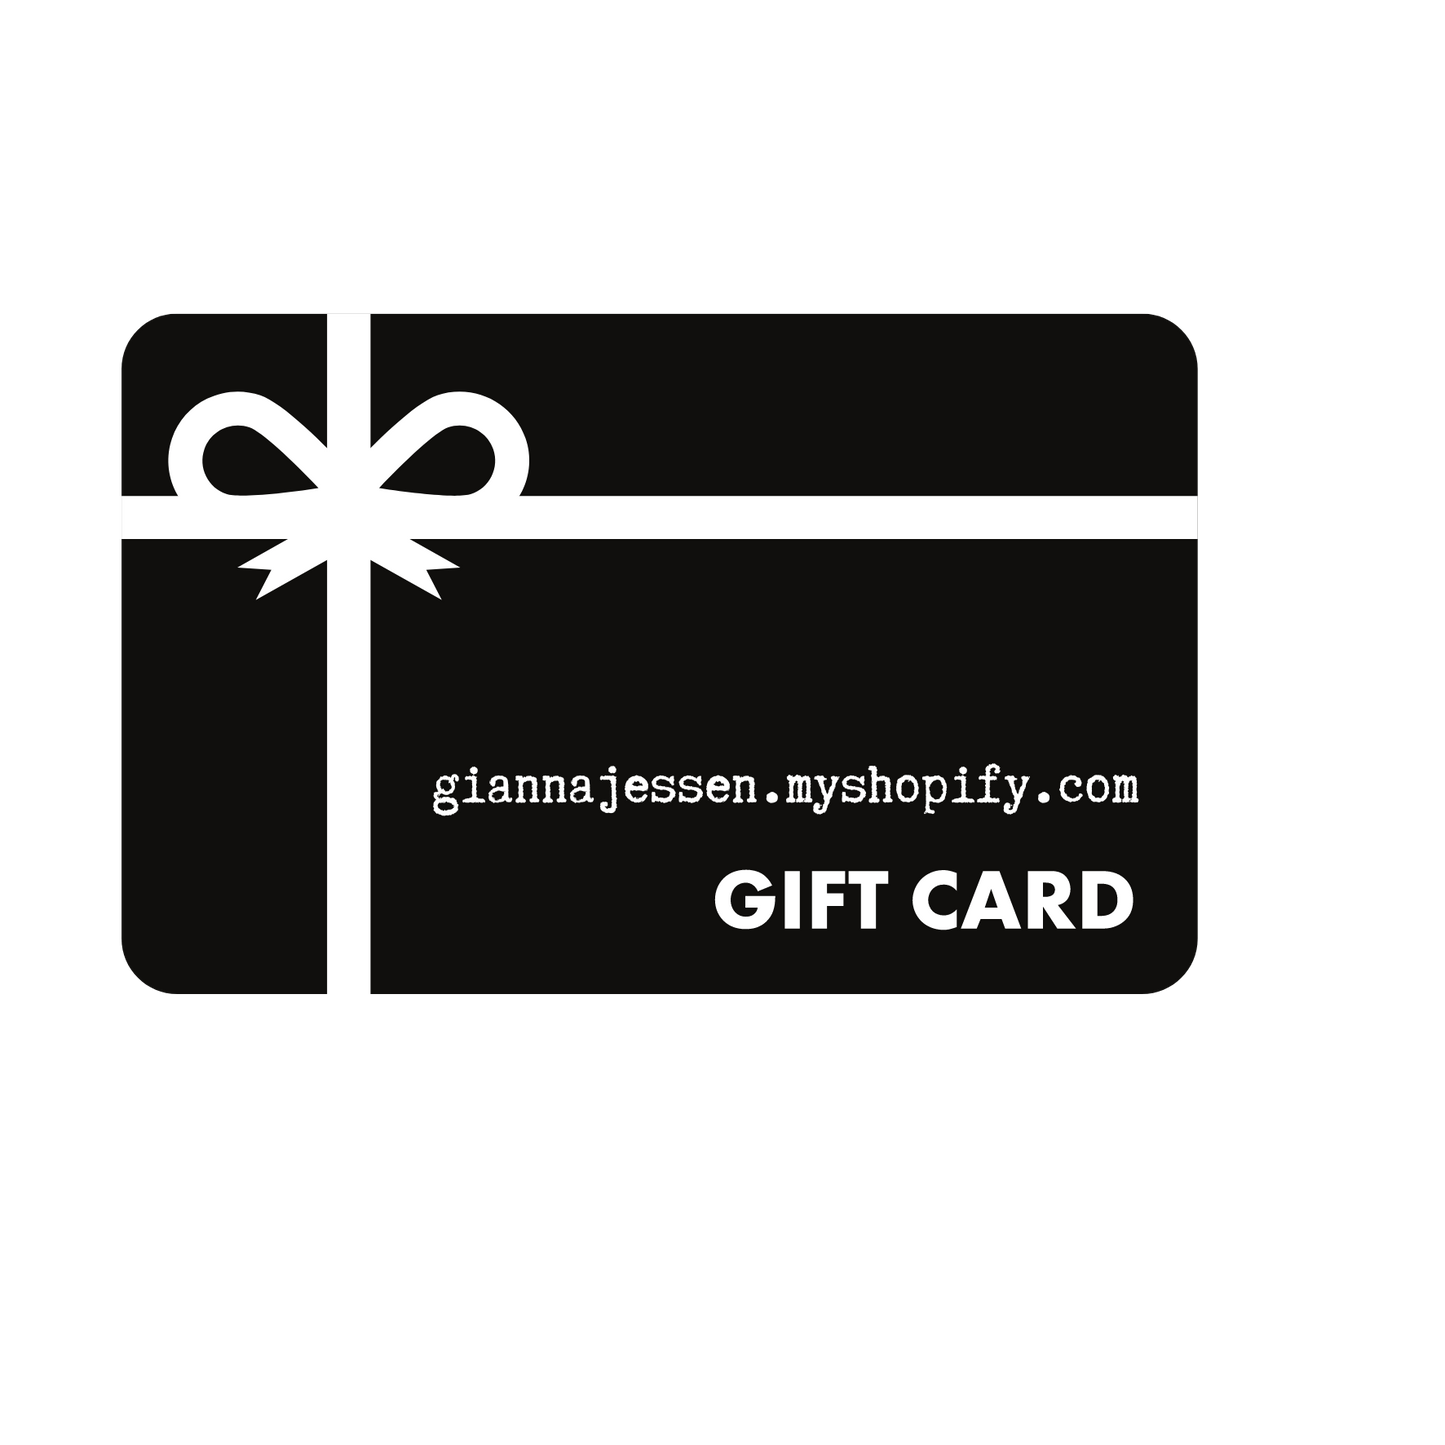 giannajessen.myshopify.com gift card